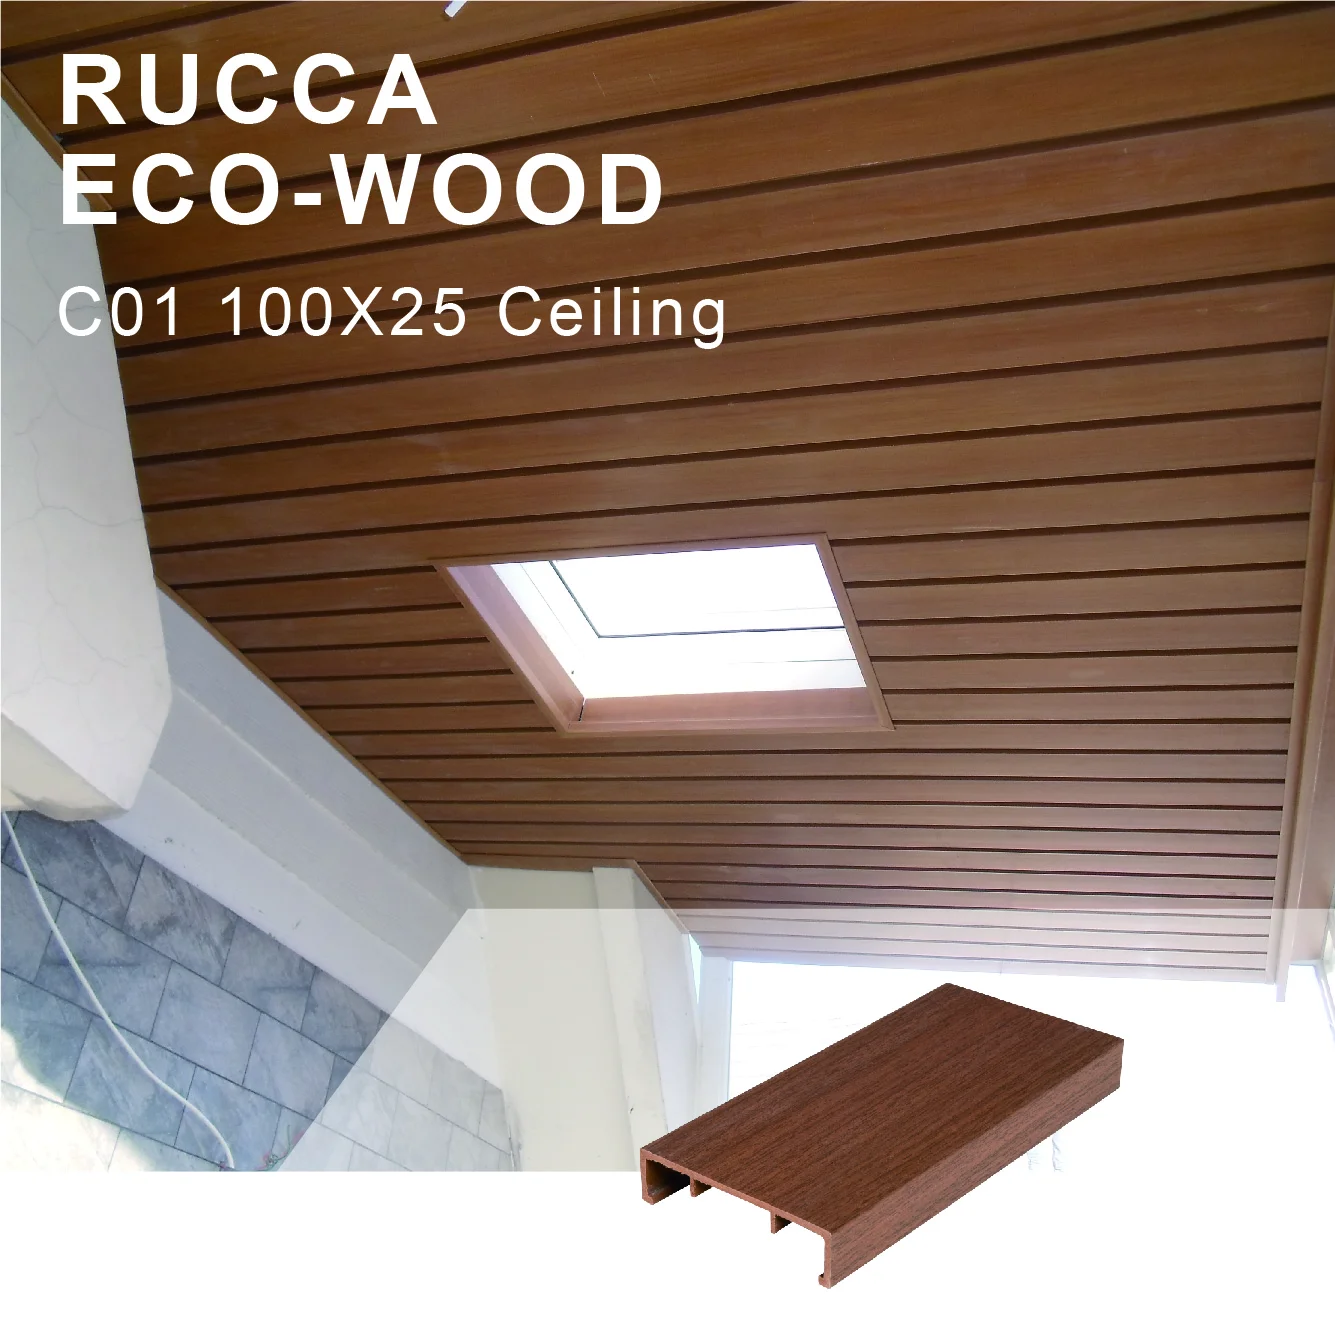 Foshan Ruccawood Wpc Indoor Decorative Suspended Ceiling Panel Pvc False Ceiling Panel Design For Living Room Bathroom 100 25mm Buy False